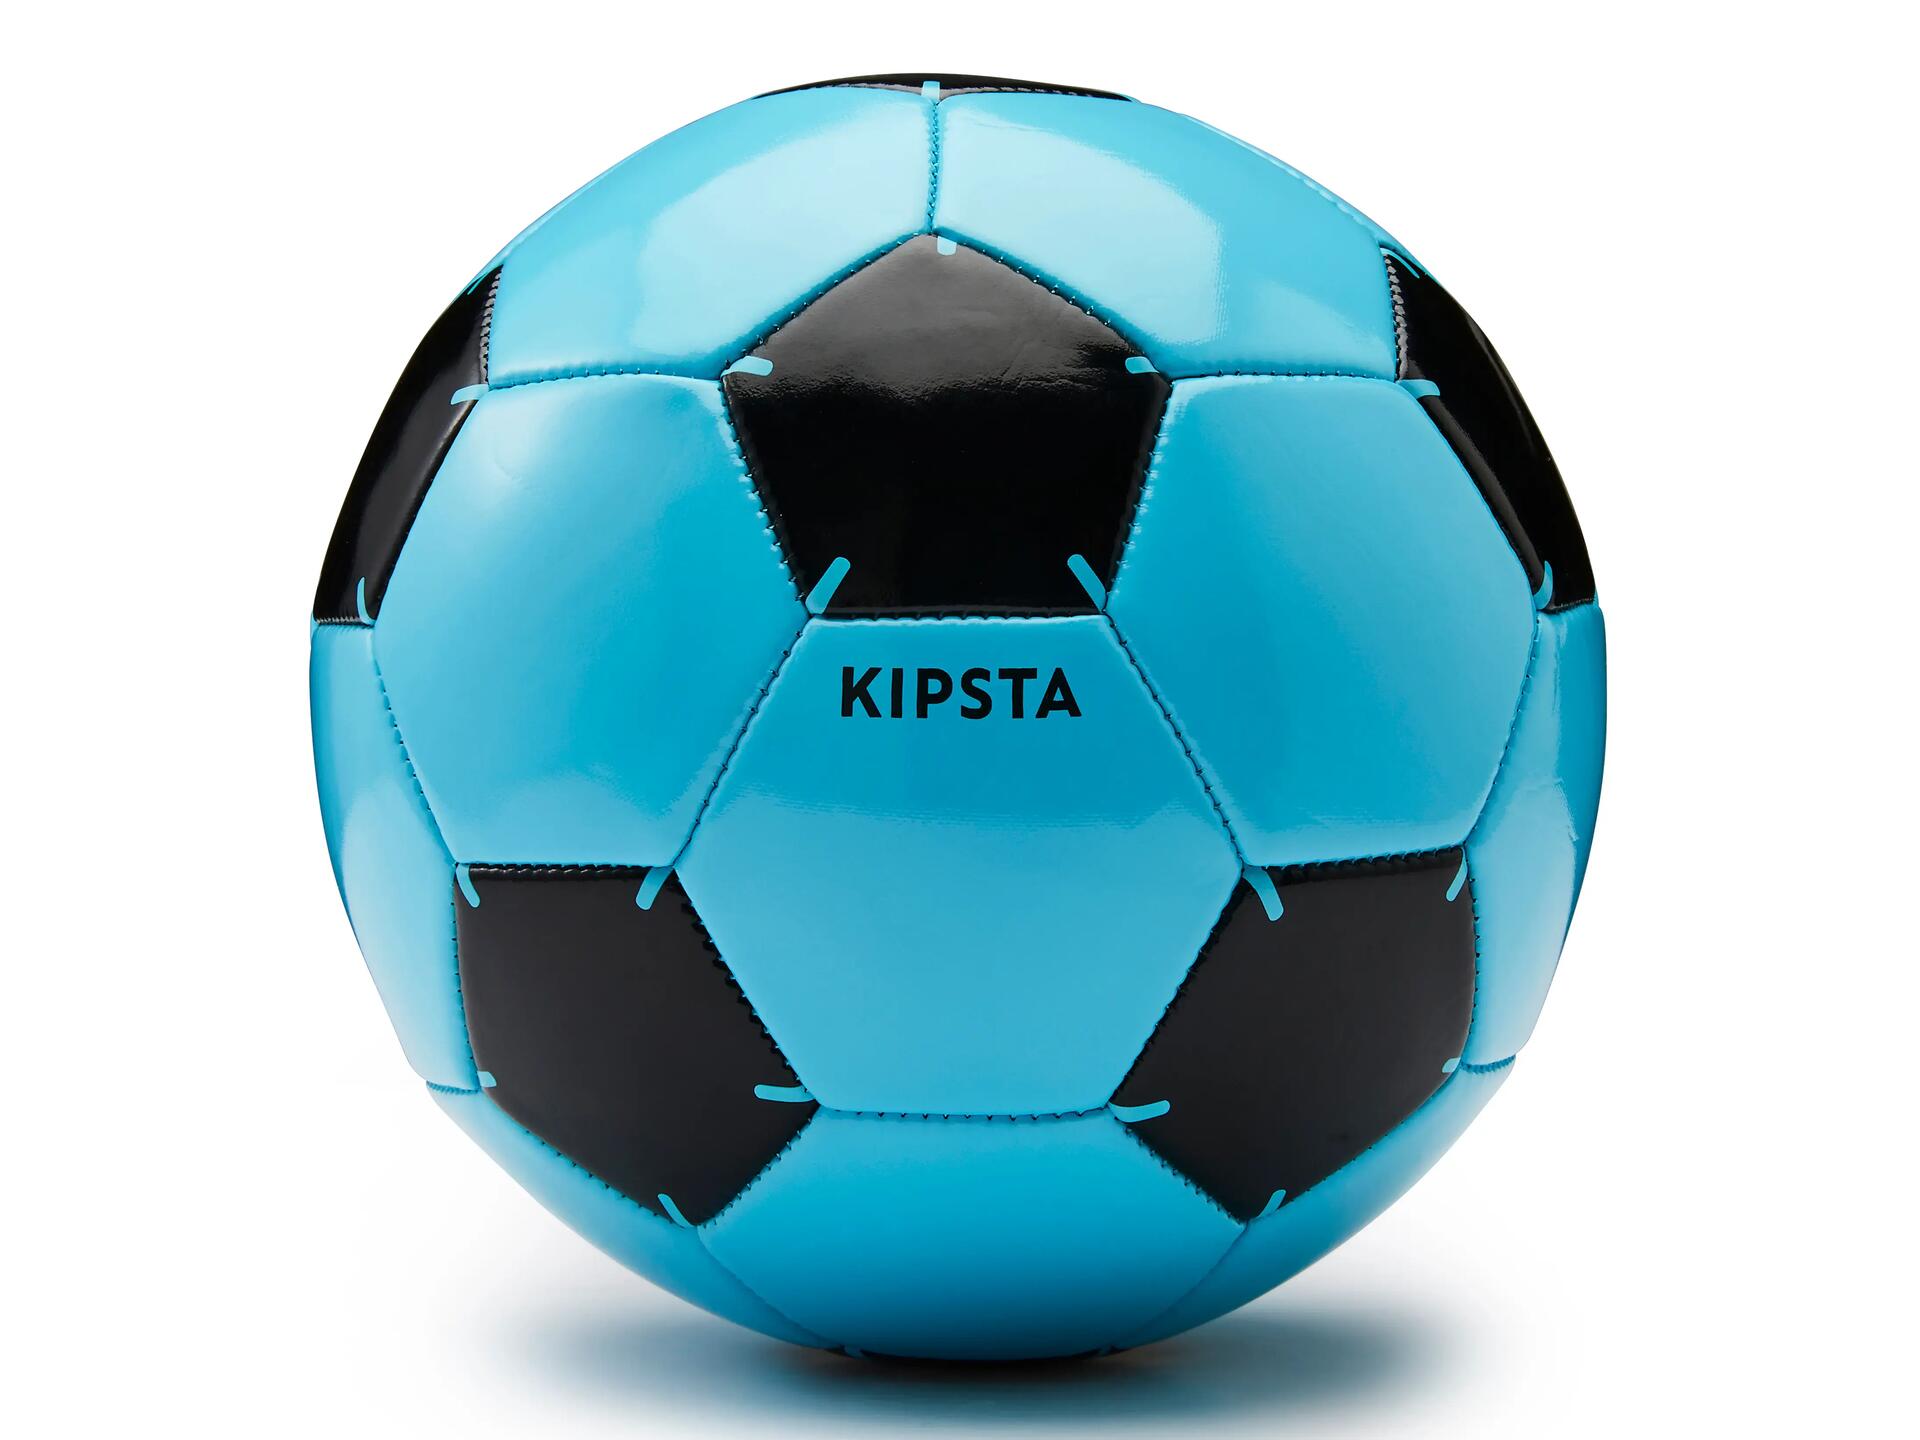 Kipsta First Kick S3